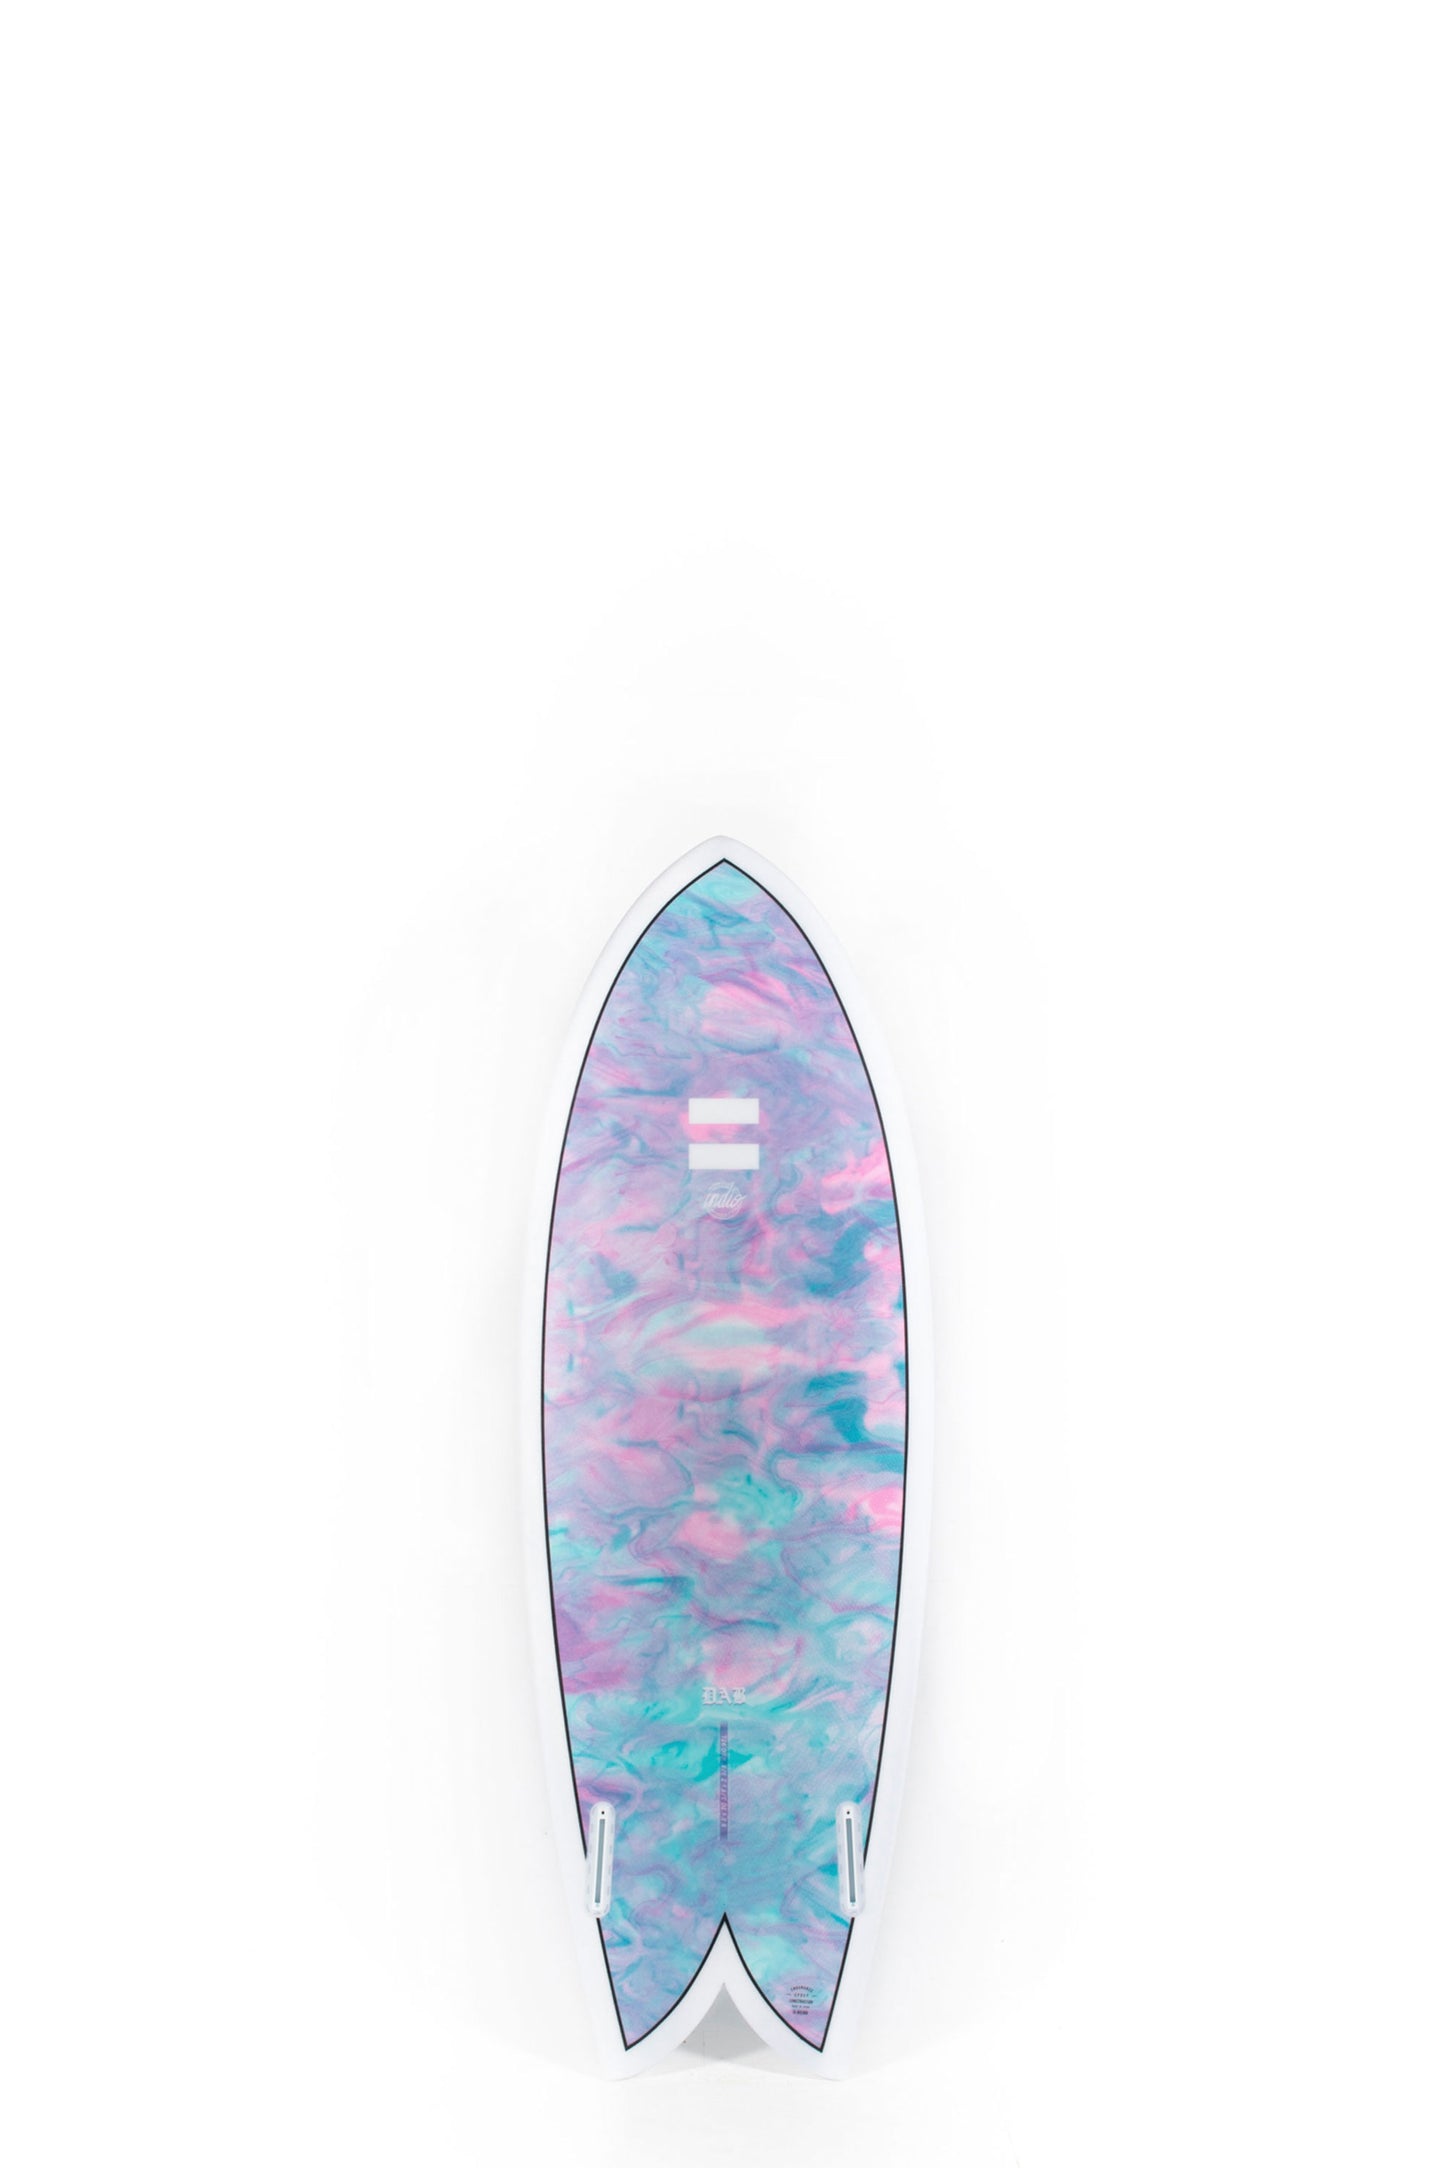 Pukas Surf Shop - Indio Surfboards - DAB Swirl Effect Blue Purple - 5’5” x 20 7/8 x 2 1/2 x 33.5L.